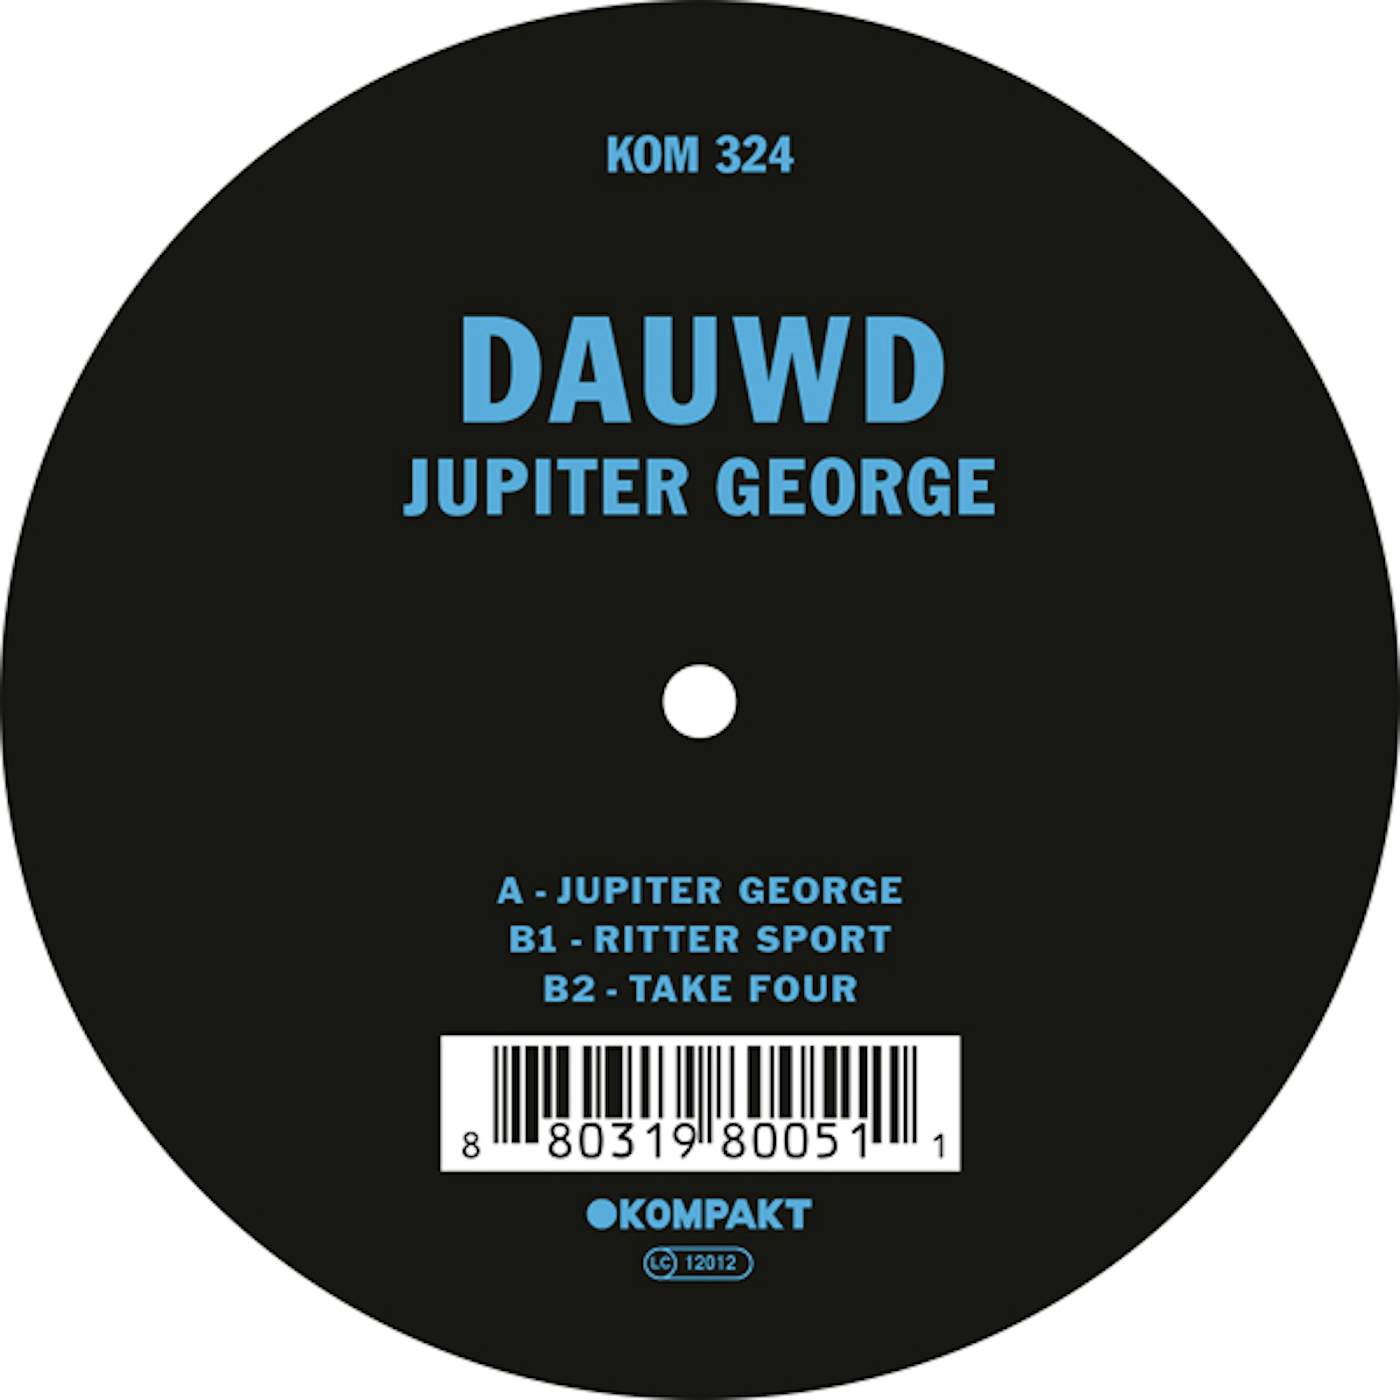 Dauwd Jupiter George Vinyl Record